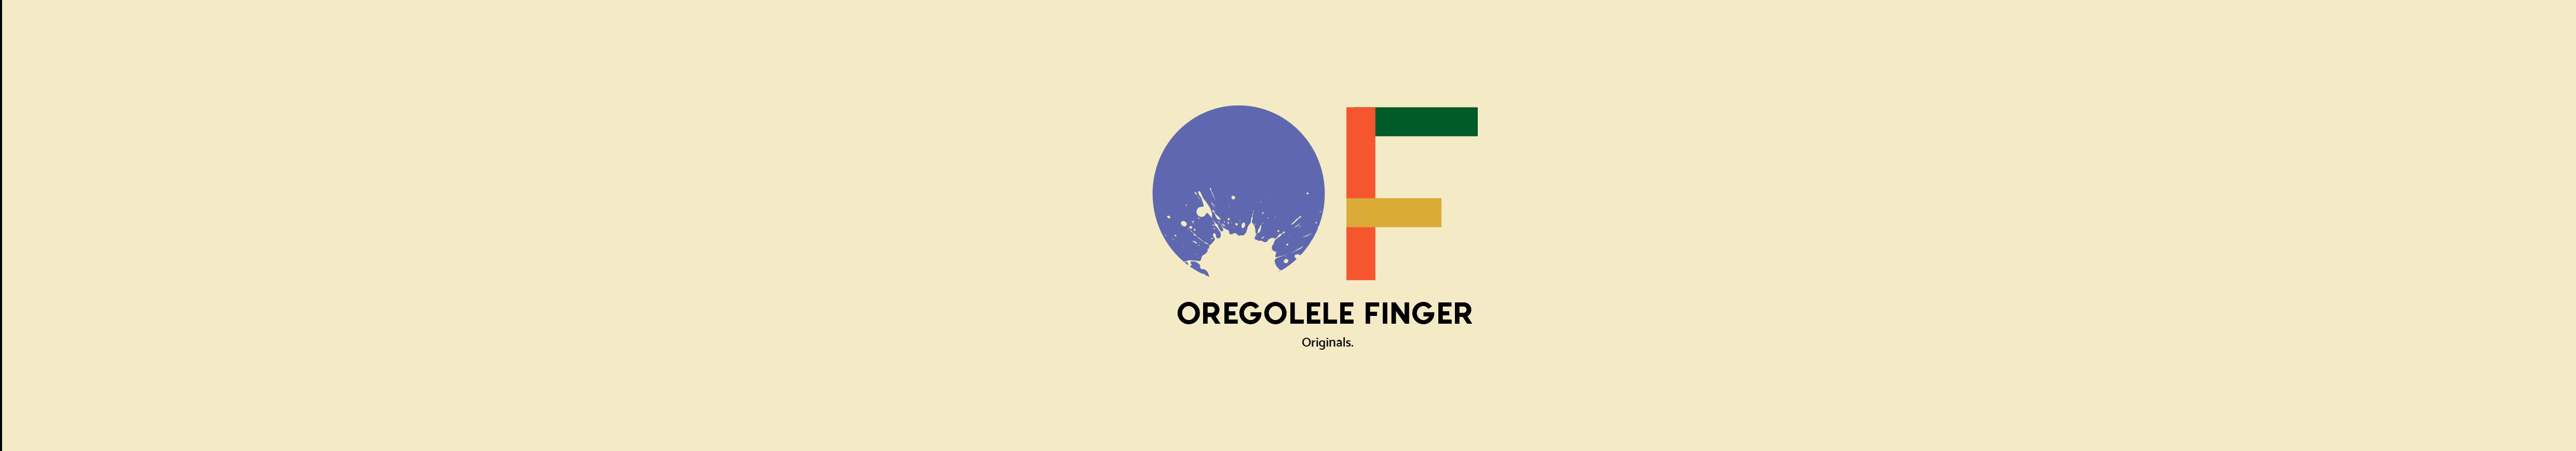 Banner de perfil de Oregolelele Finger